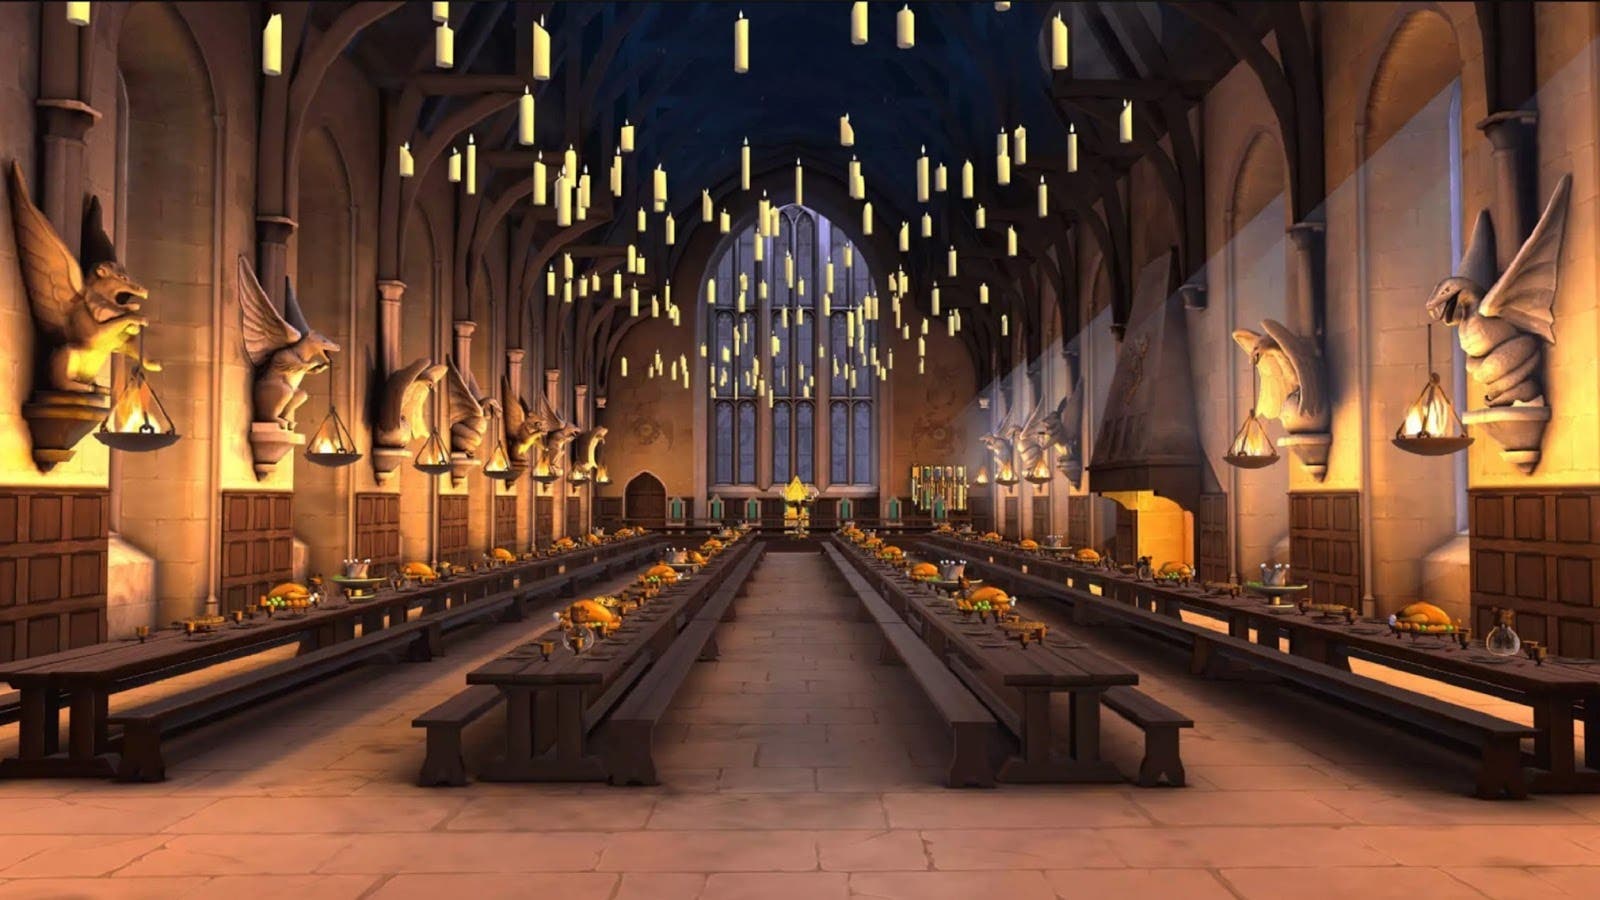 Fan de Harry Potter ha recreado el Gran Comedor de Hogwarts en Animal Crossing: New Horizons